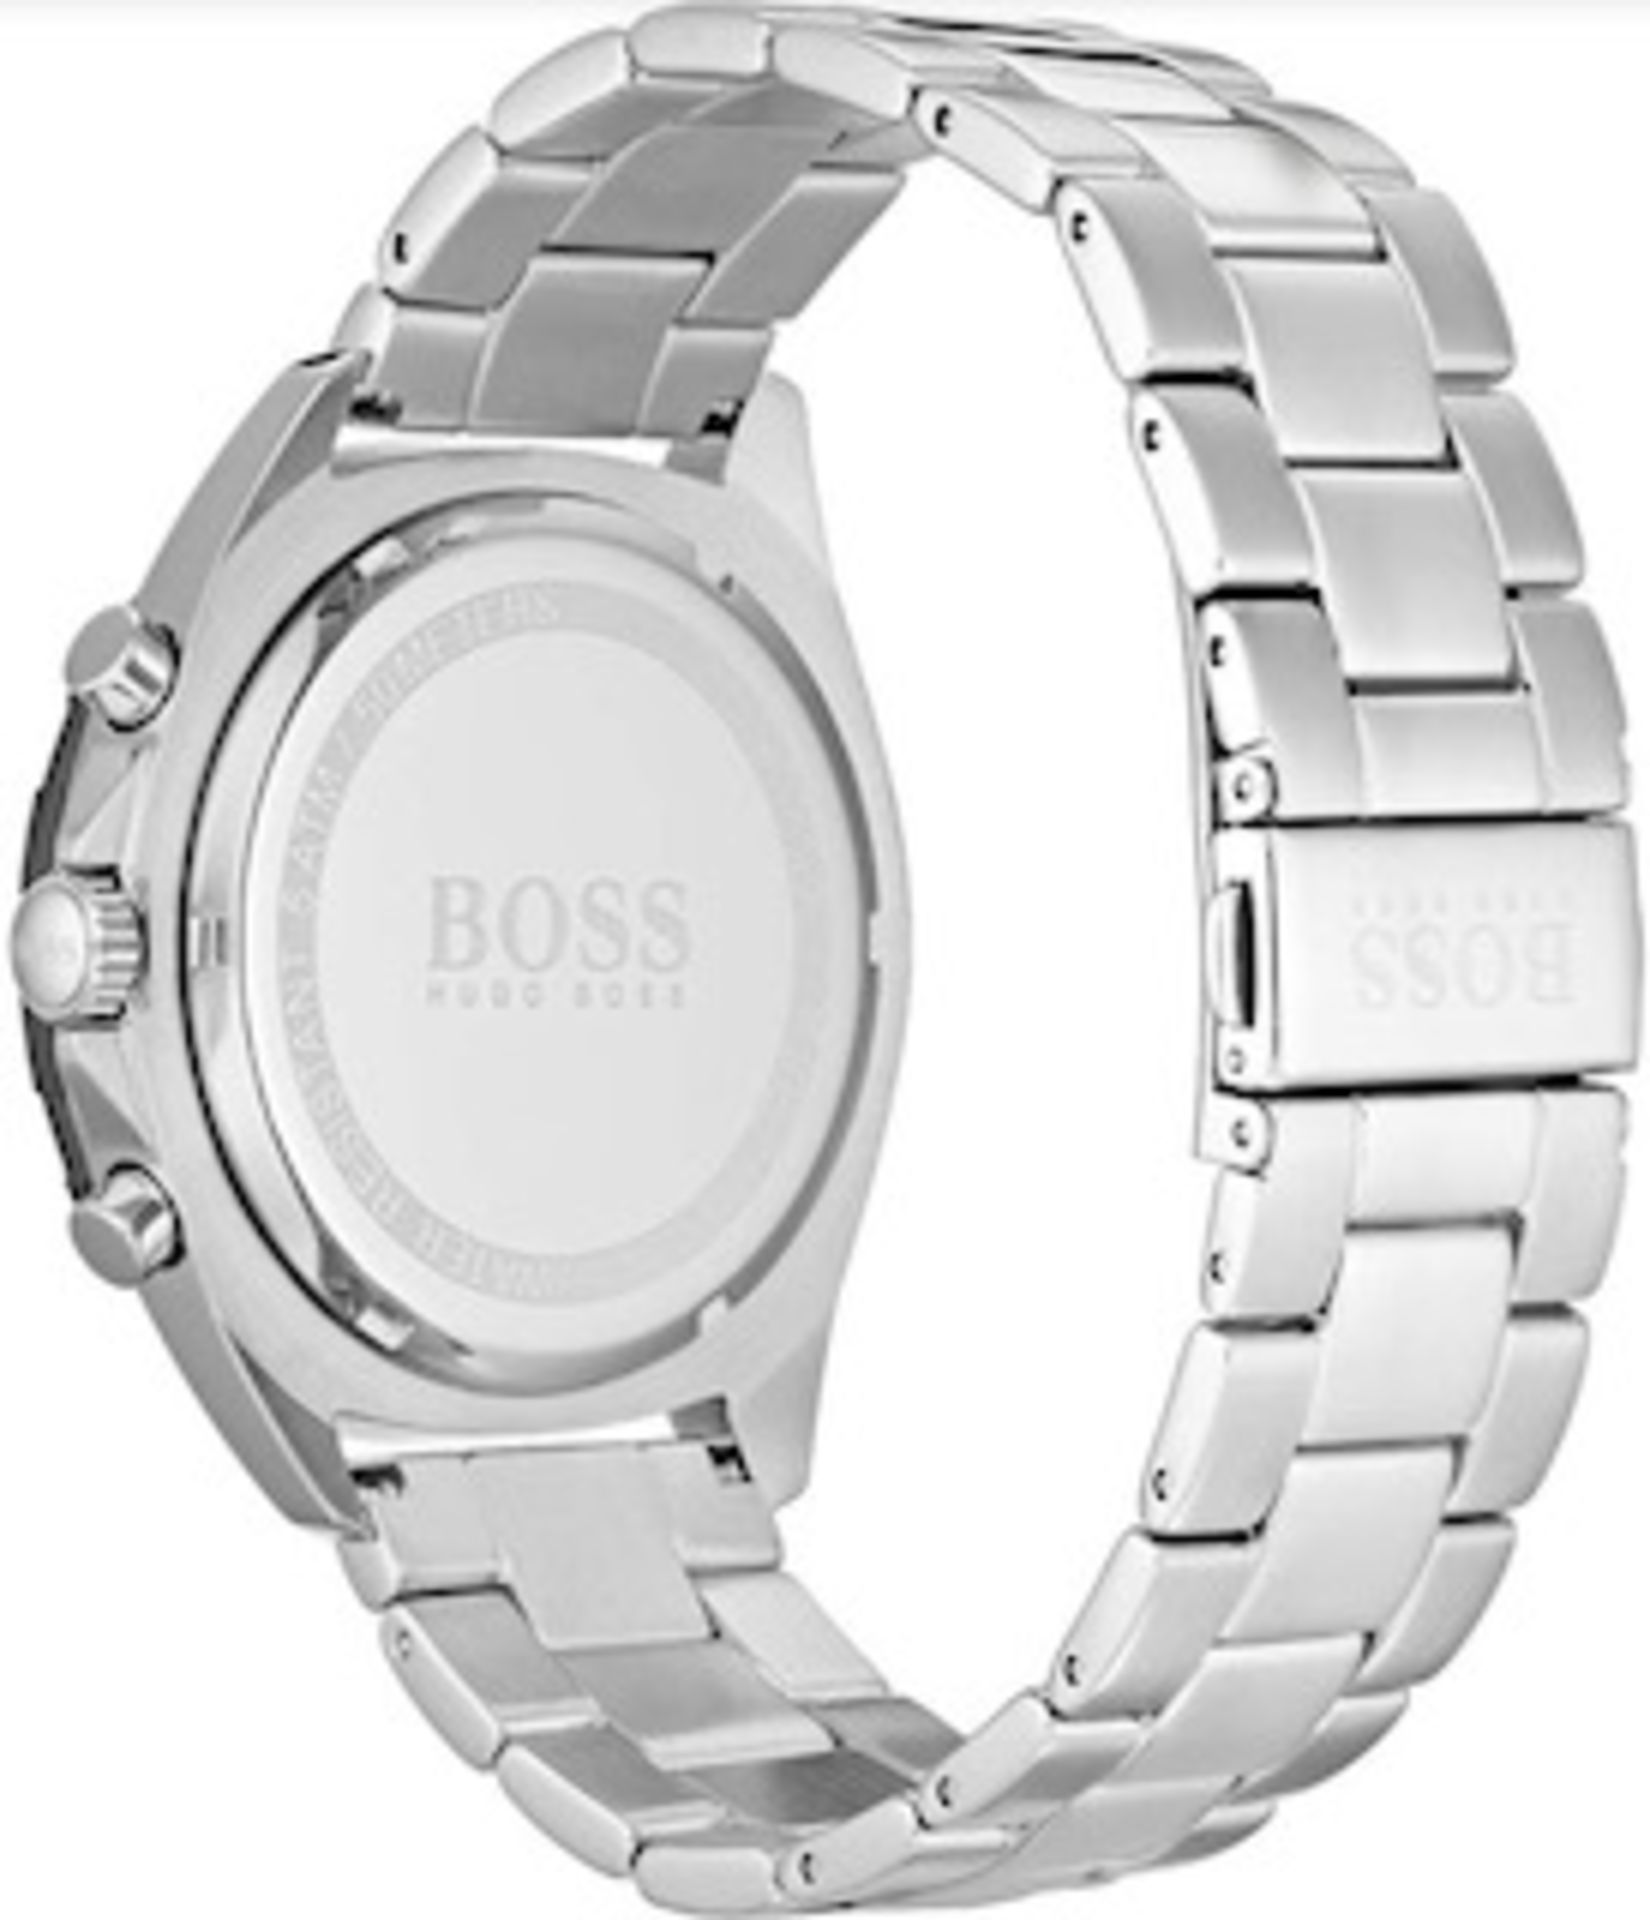 Hugo Boss 1513682 Men's Intensity Green Dial Silver Bracelet Chronograph Watch - Image 4 of 6